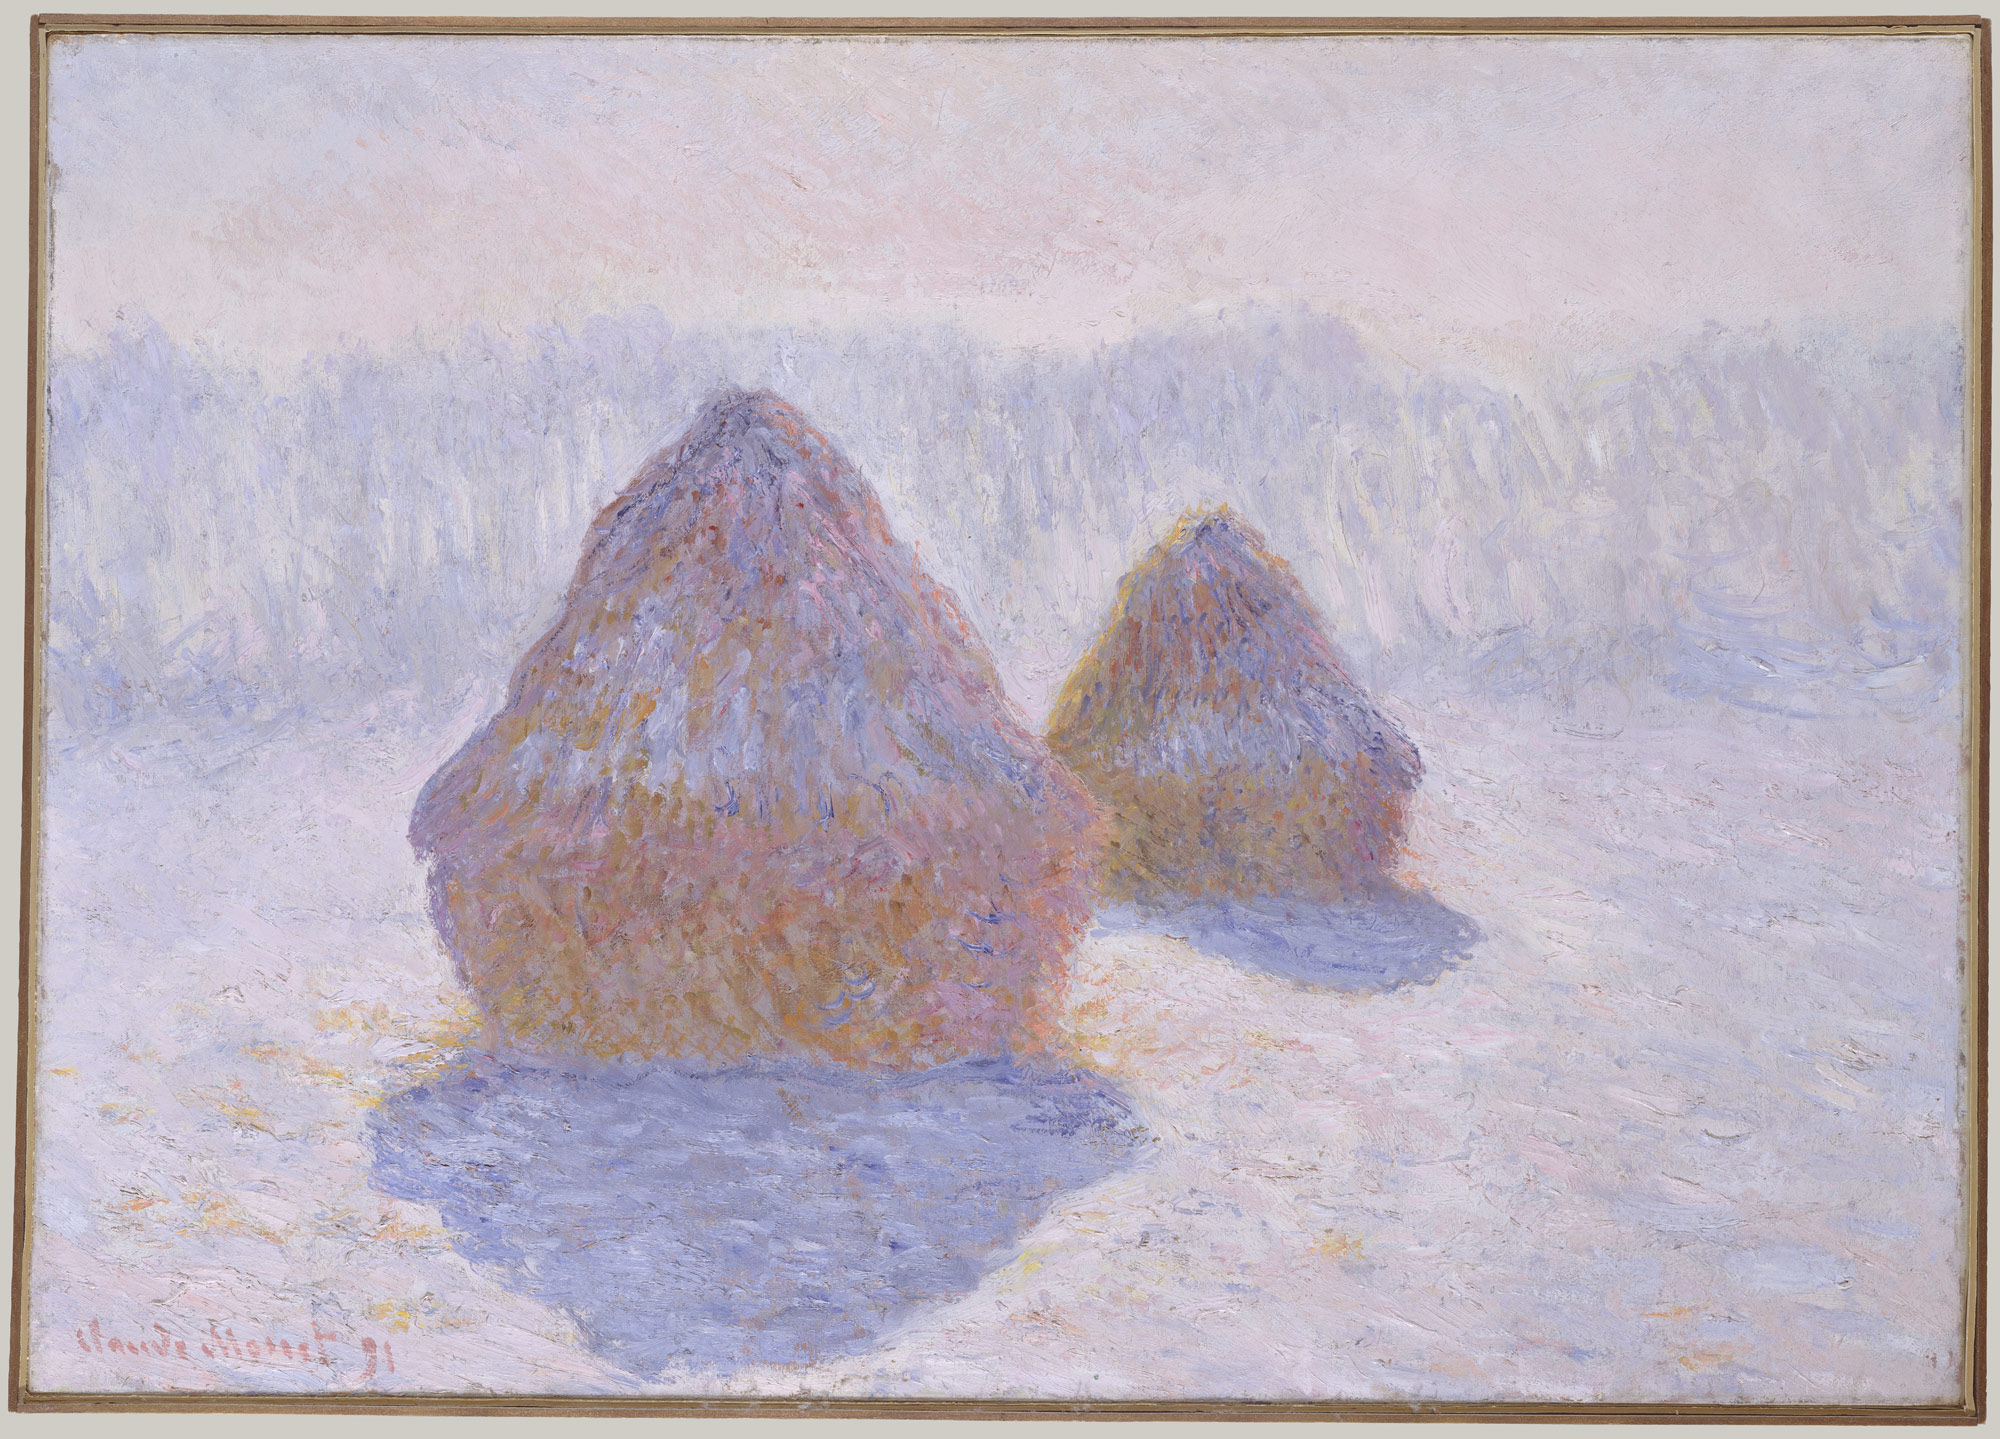 Haystacks (Effect of Snow and Sun) by Claude Monet - 1891 - 65.4 x 92.1 cm Metropolitan Museum of Art